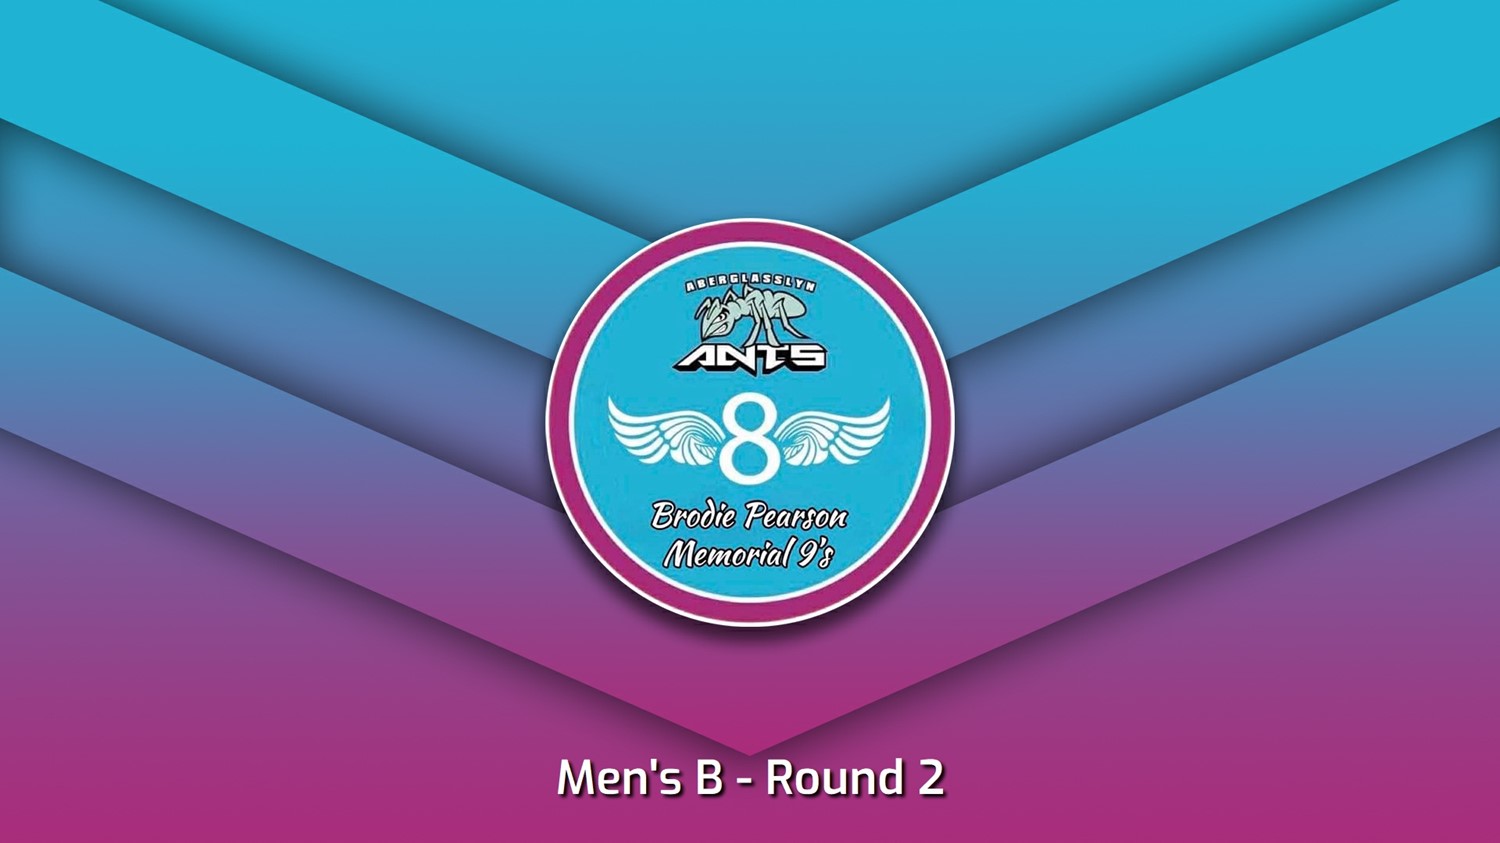 231007-Brodie Pearson Memorial 9s Round 2 - Men's B - Maitland United v Brodie Pearson Memorial Minigame Slate Image